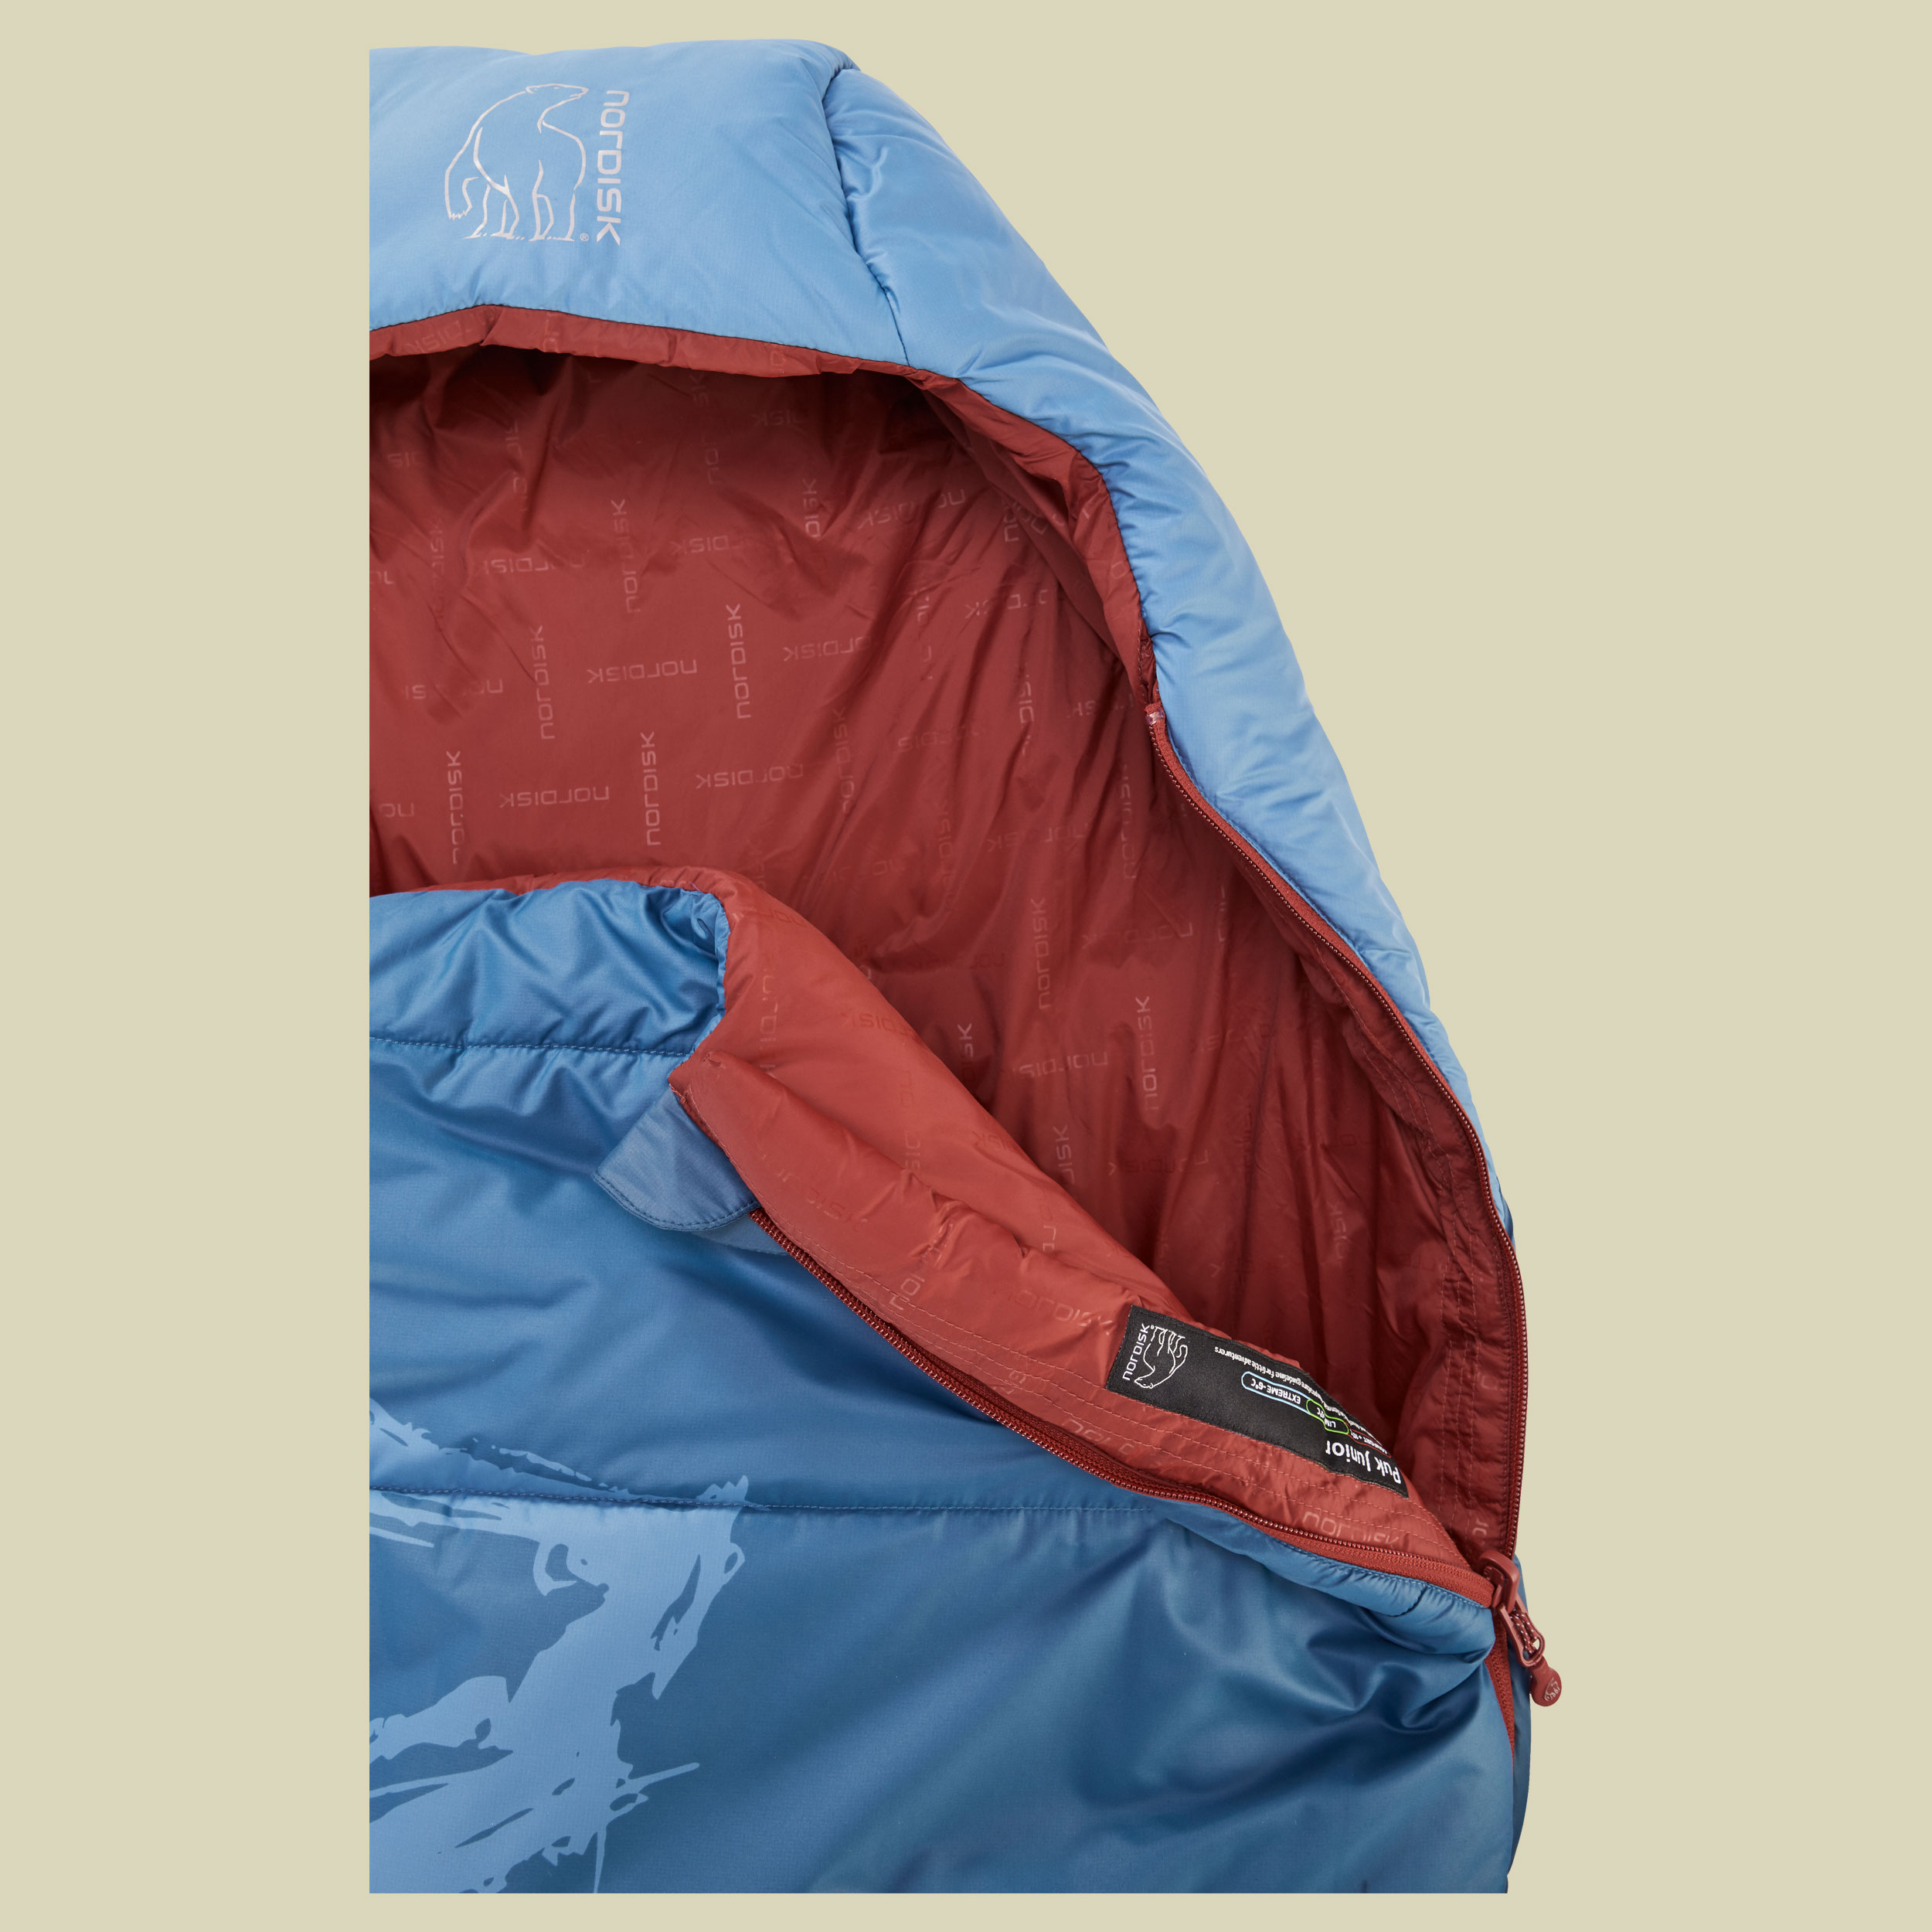 PUK Junior Sleeping Bag Körpergröße:130 bis 170 cm Farbe majolica blue